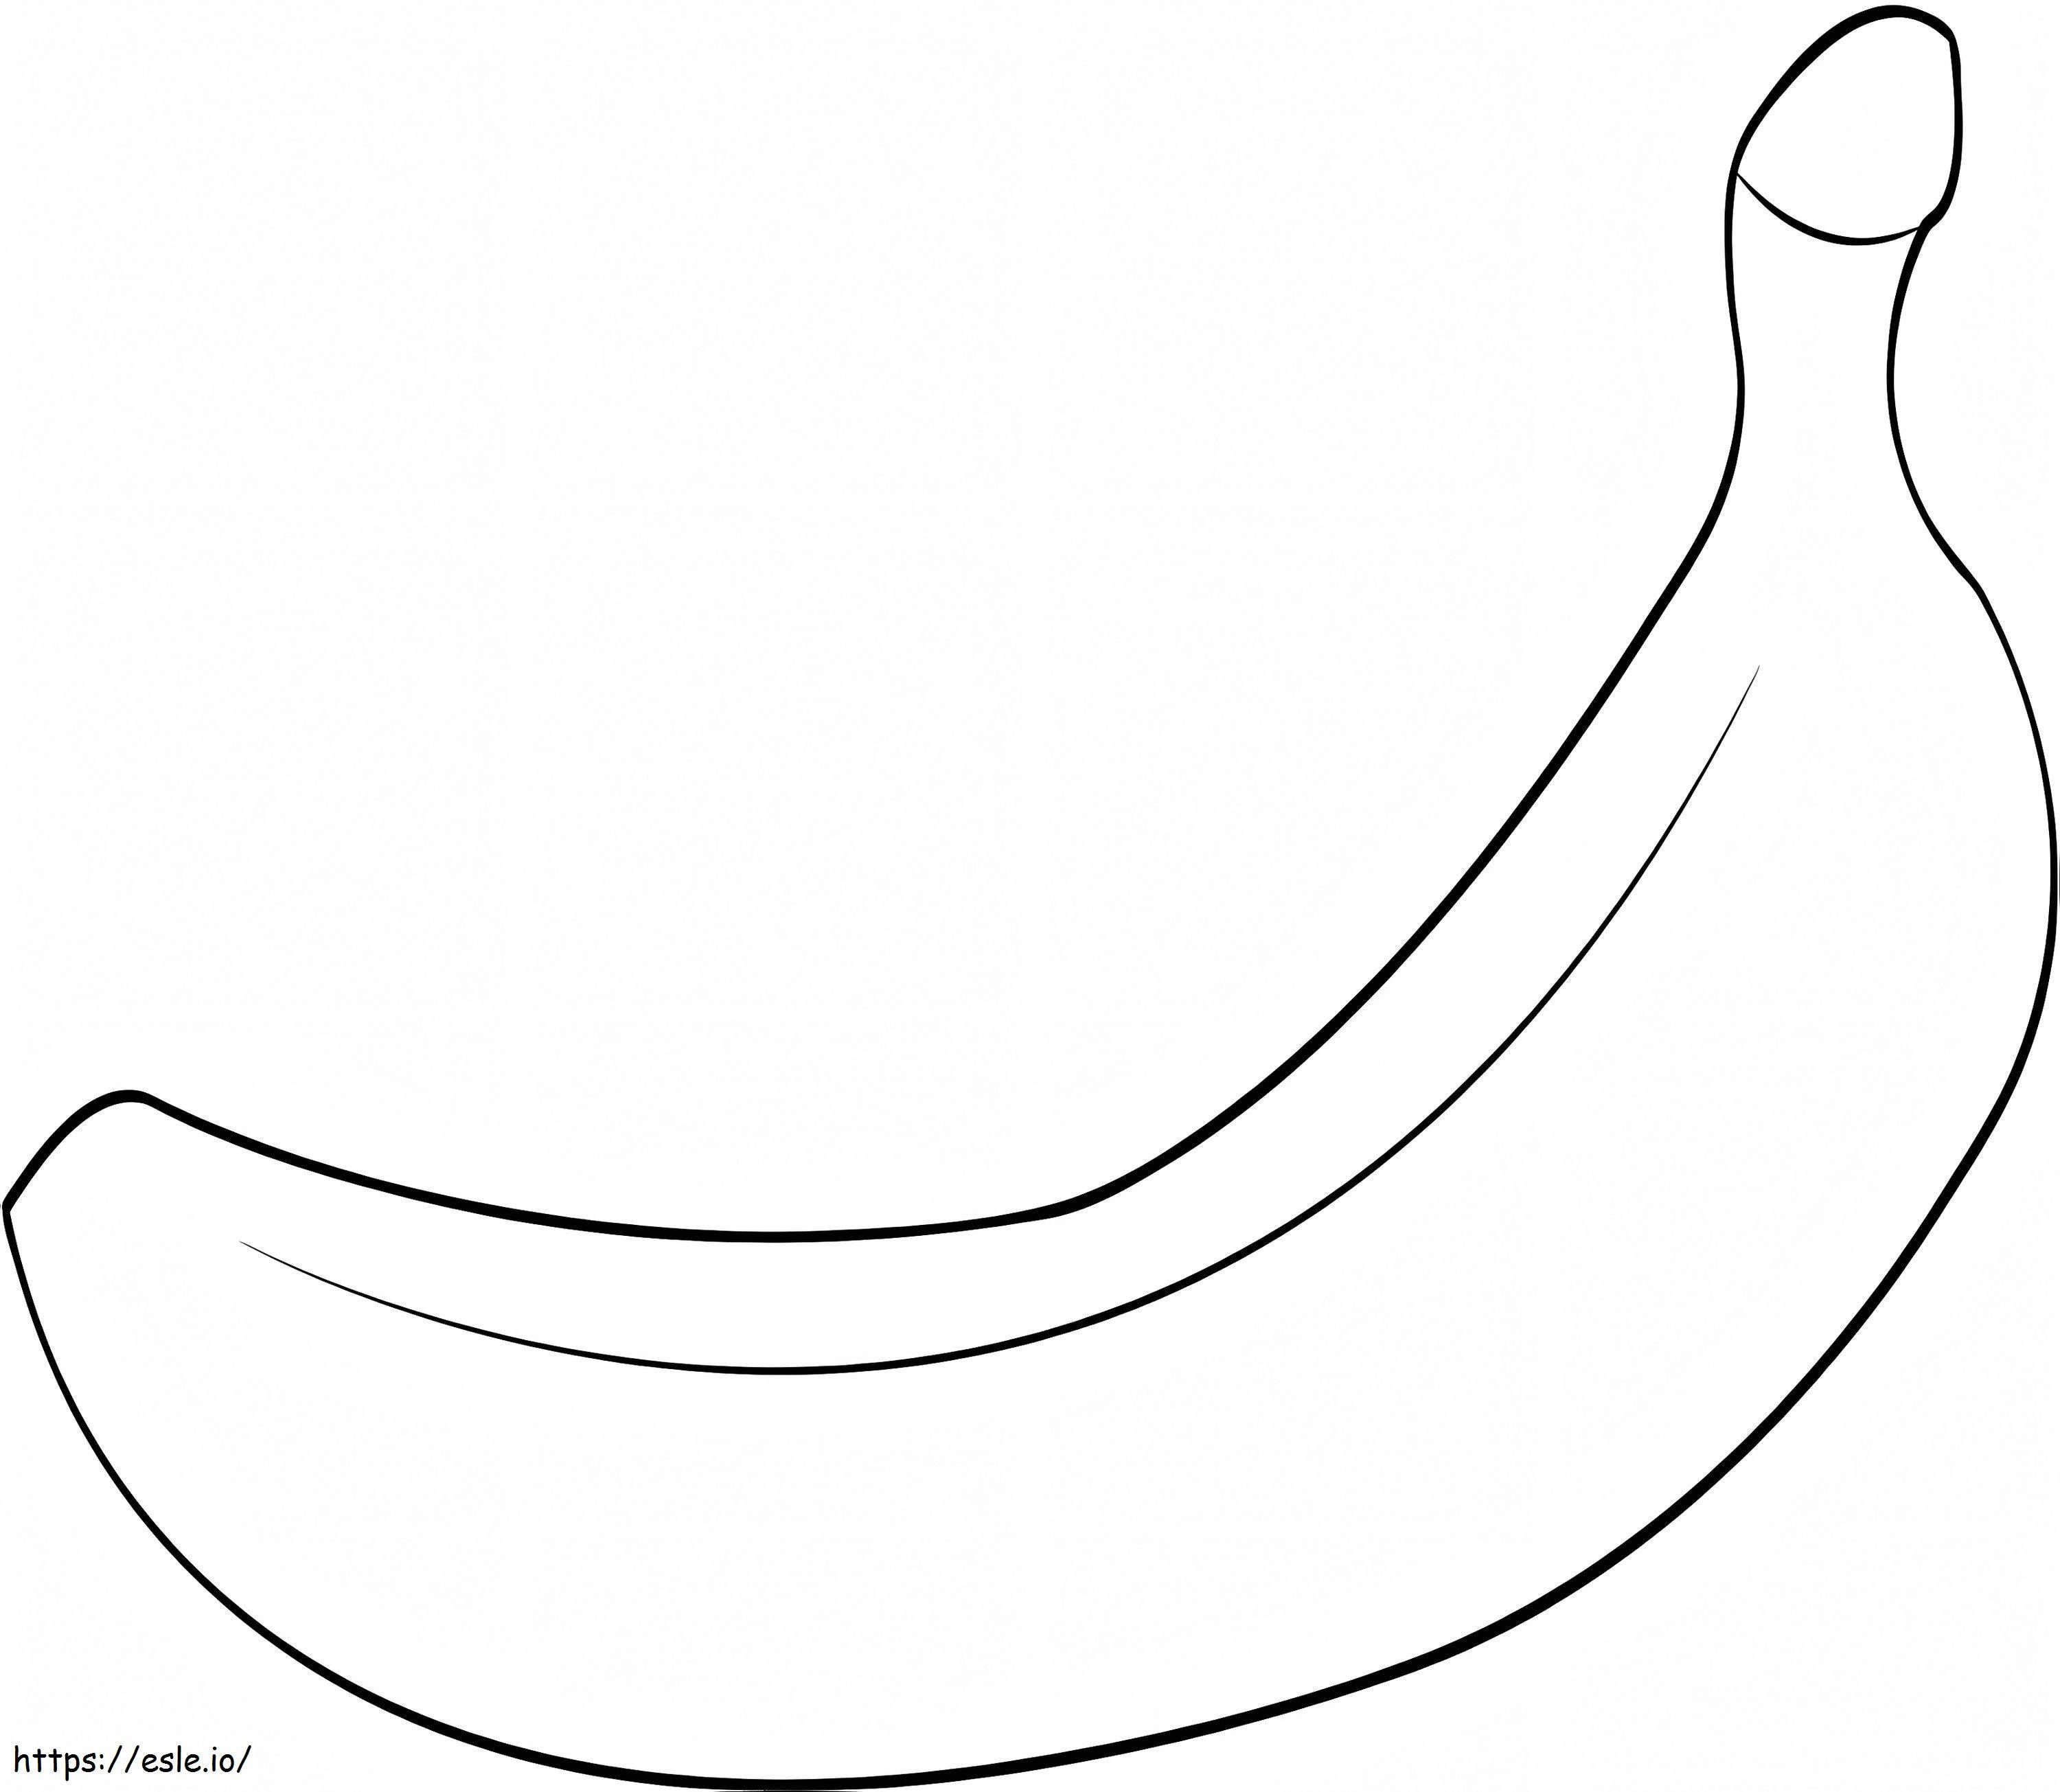 Awesome Banana coloring page